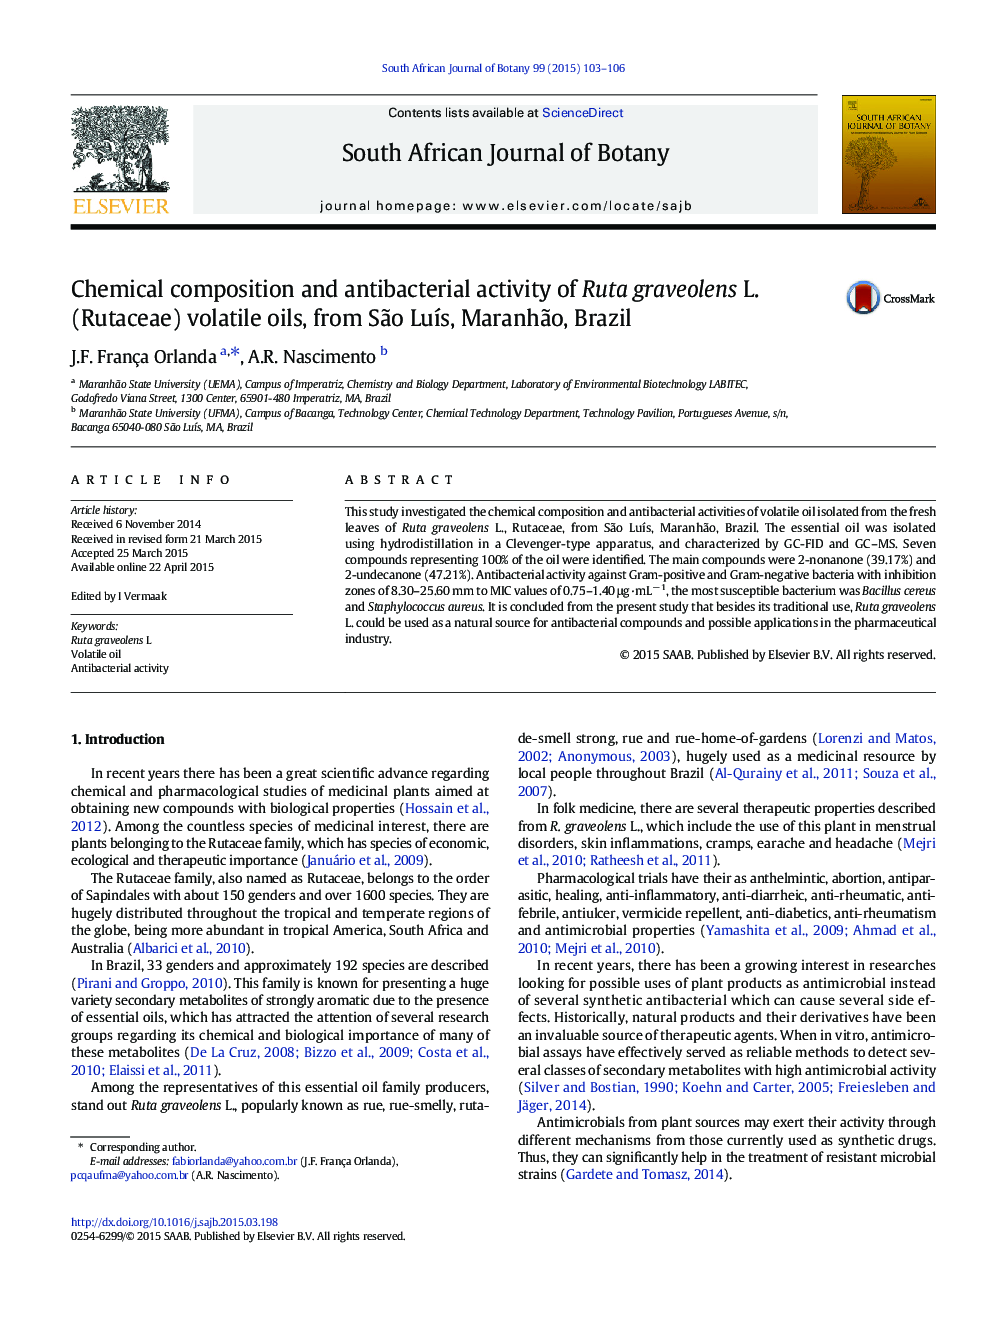 Chemical composition and antibacterial activity of Ruta graveolens L. (Rutaceae) volatile oils, from São Luís, Maranhão, Brazil